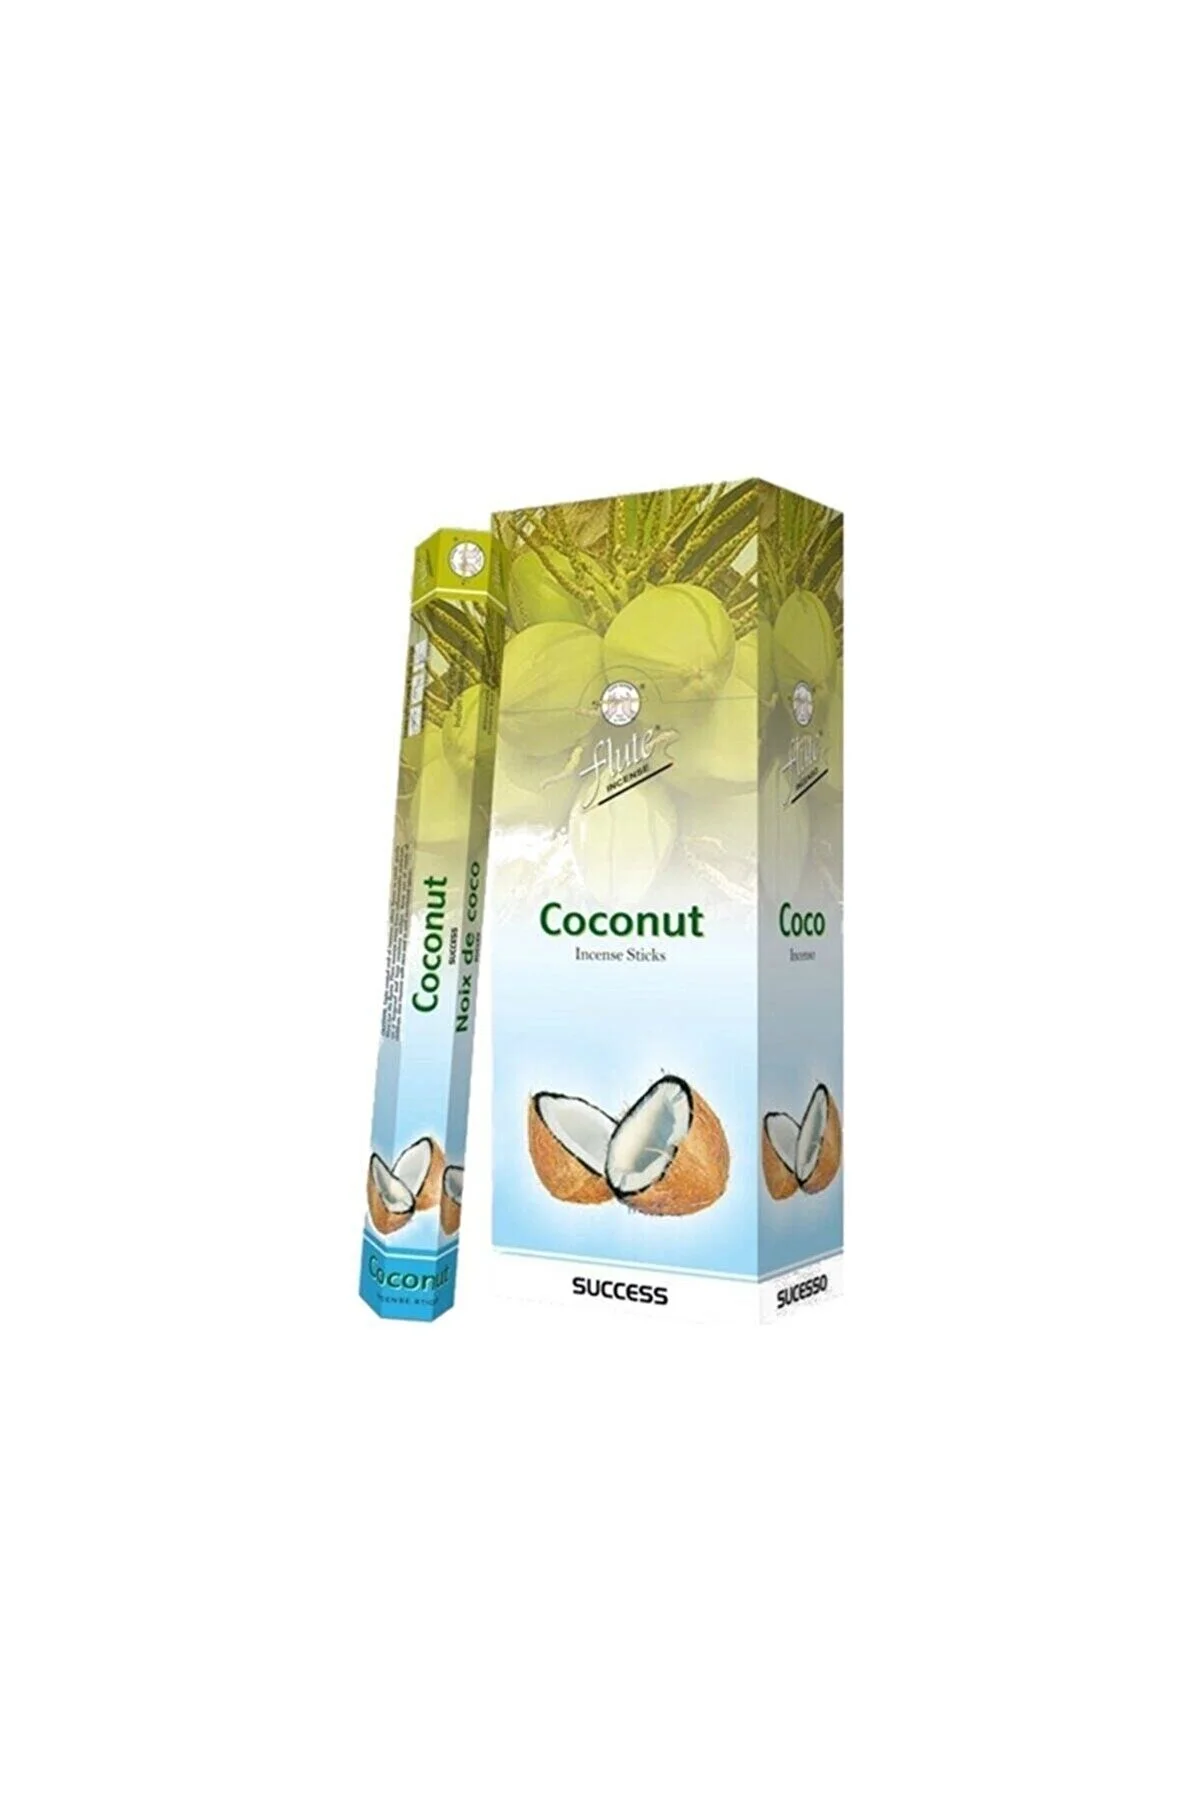 FLUTE - Flute Tütsü Hindistan Cevizi - Coconut 20 Adet Çubuk